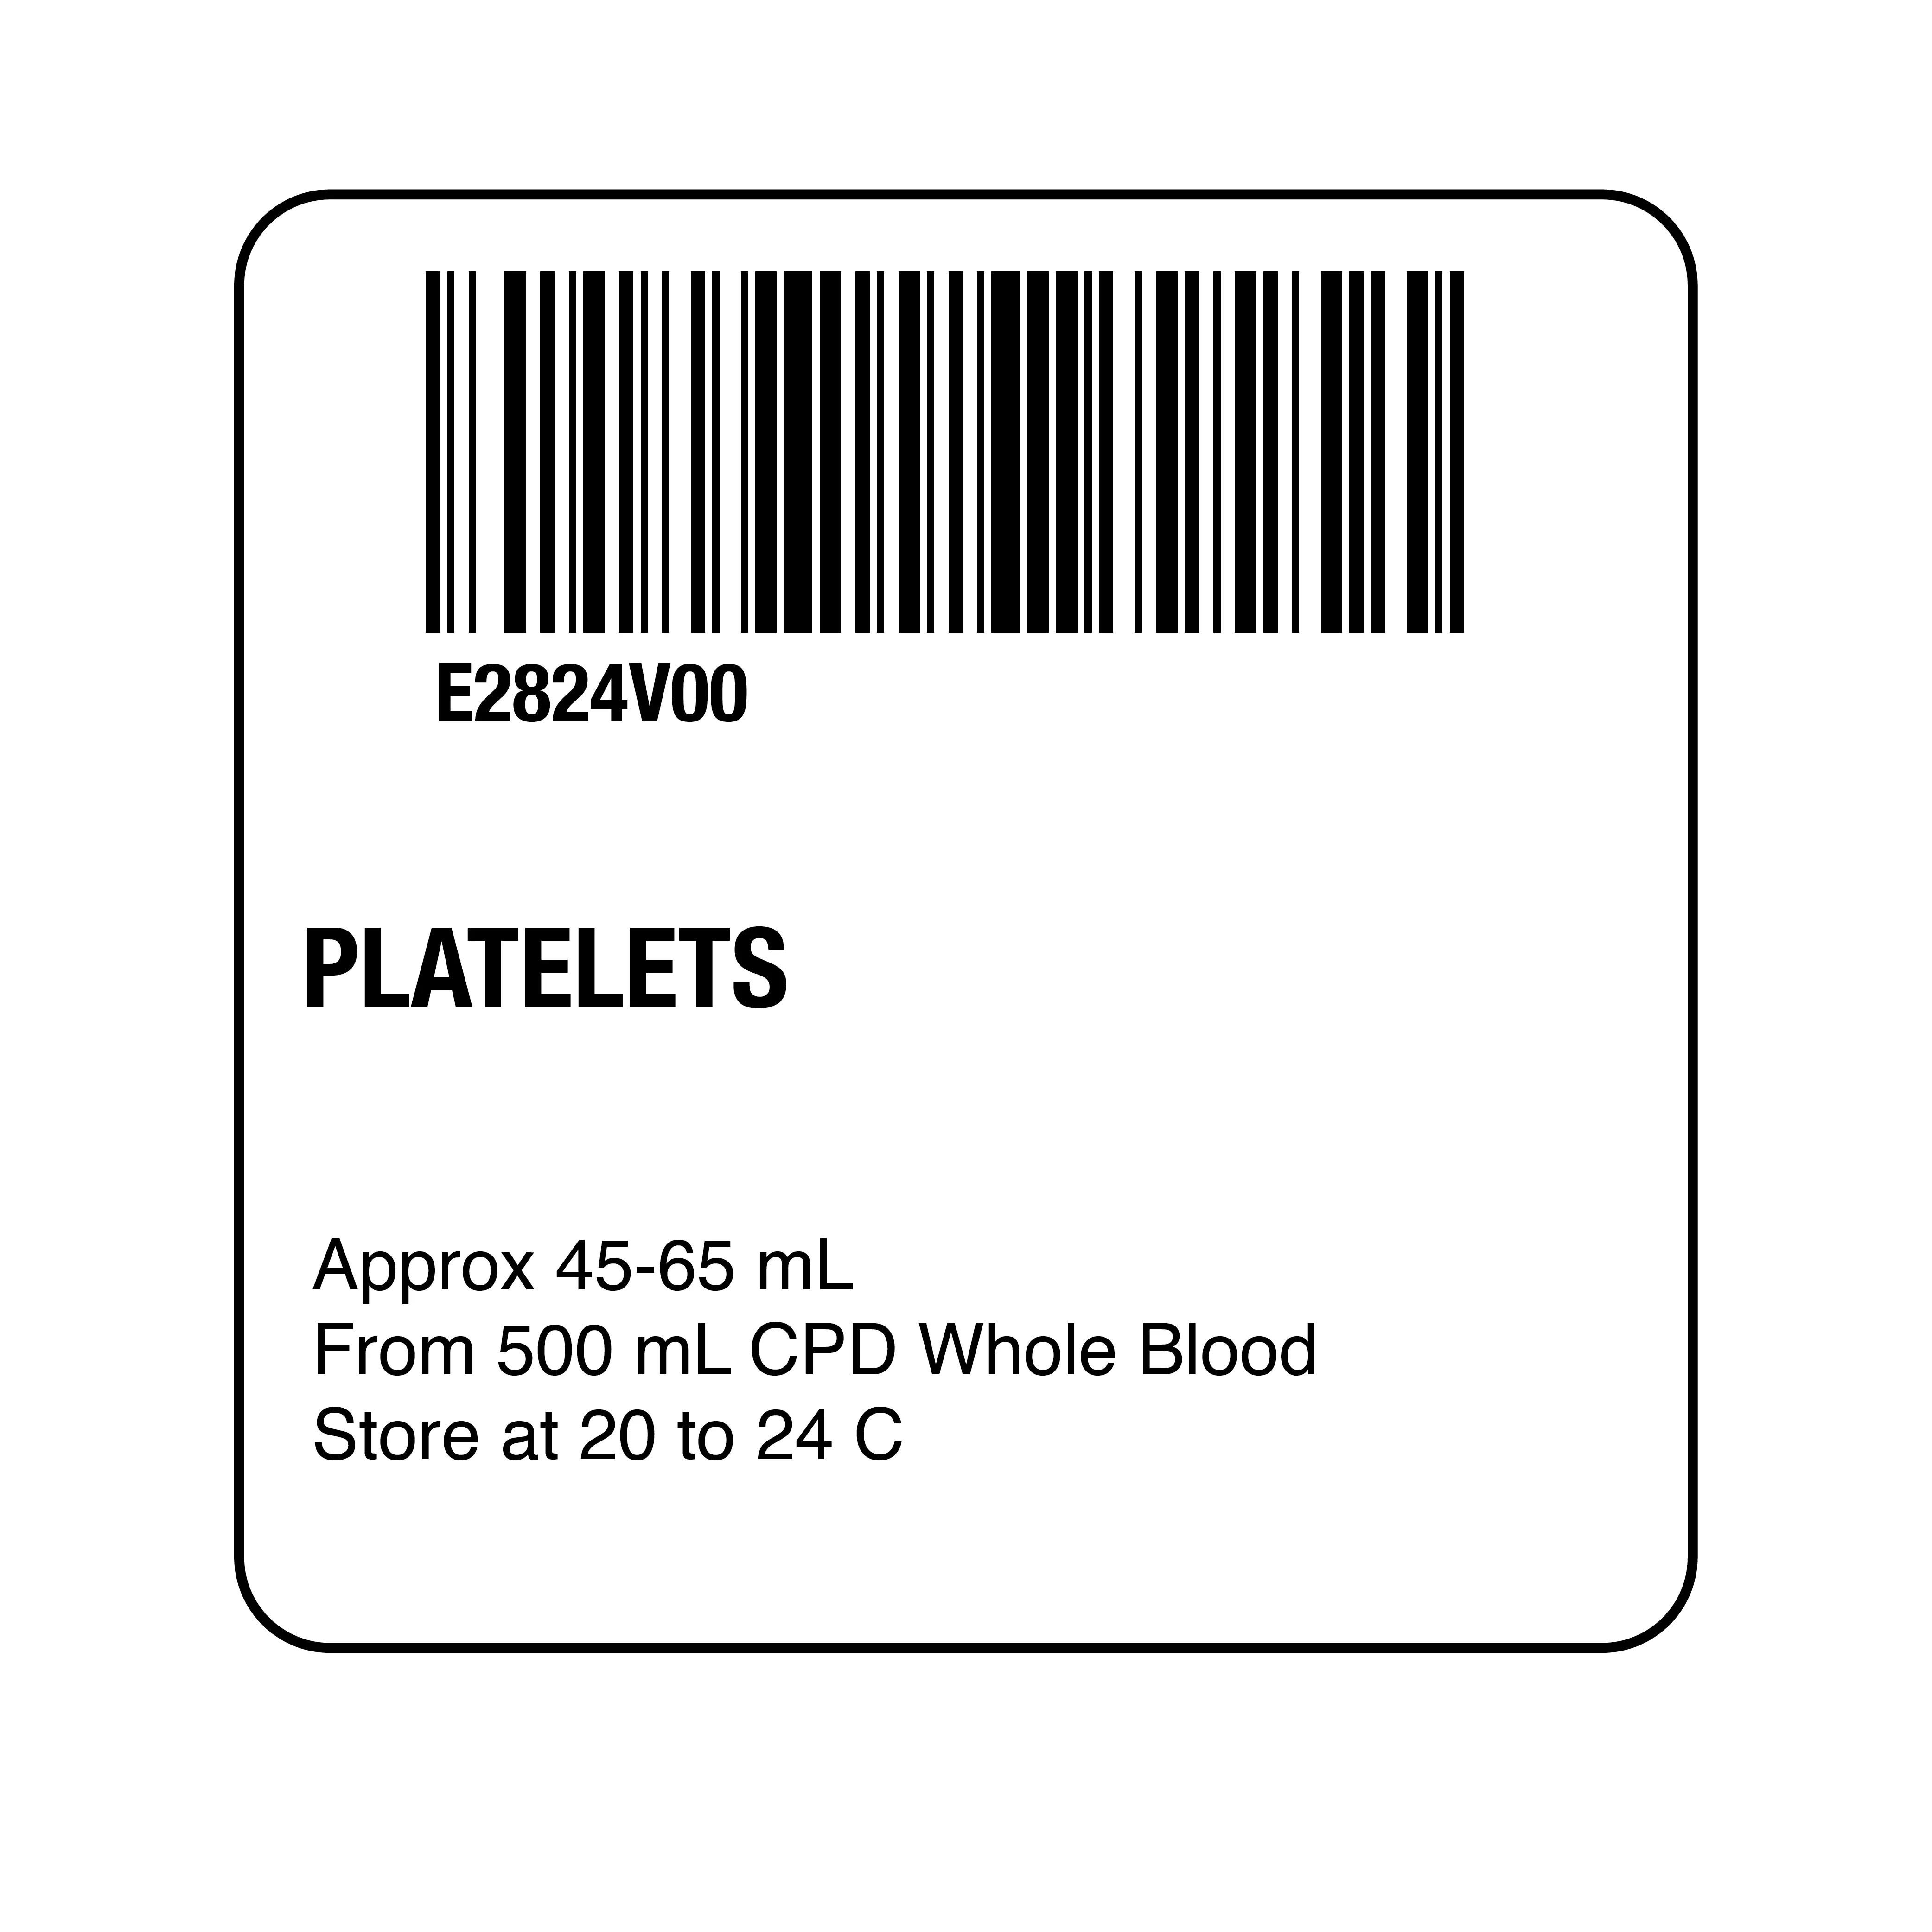 ISBT 128 Platelets